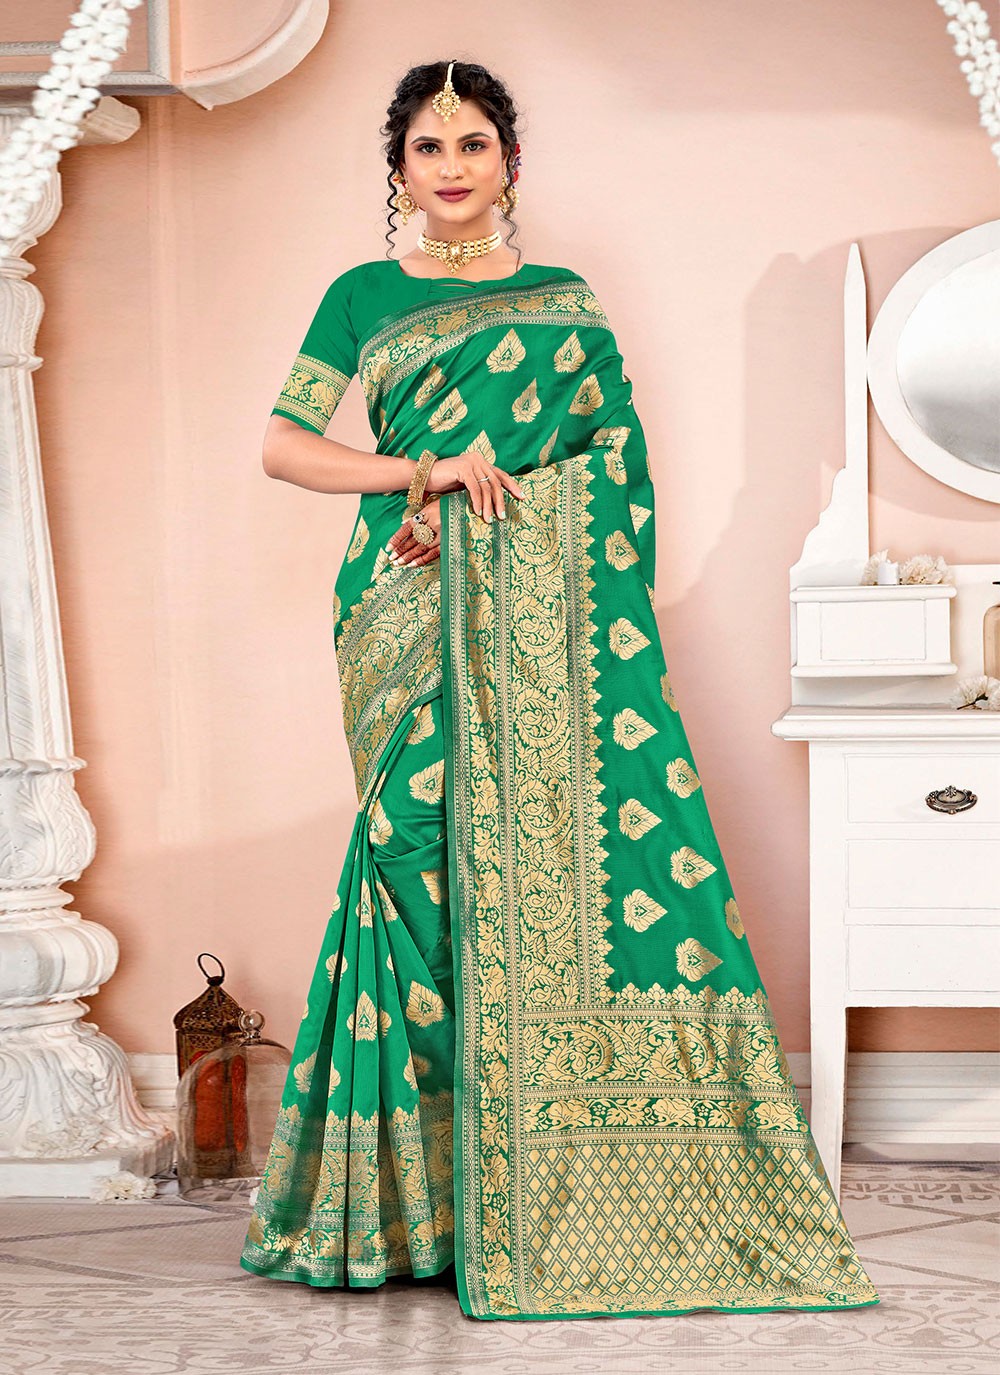 Banarasi Silk Classic Saree in Green